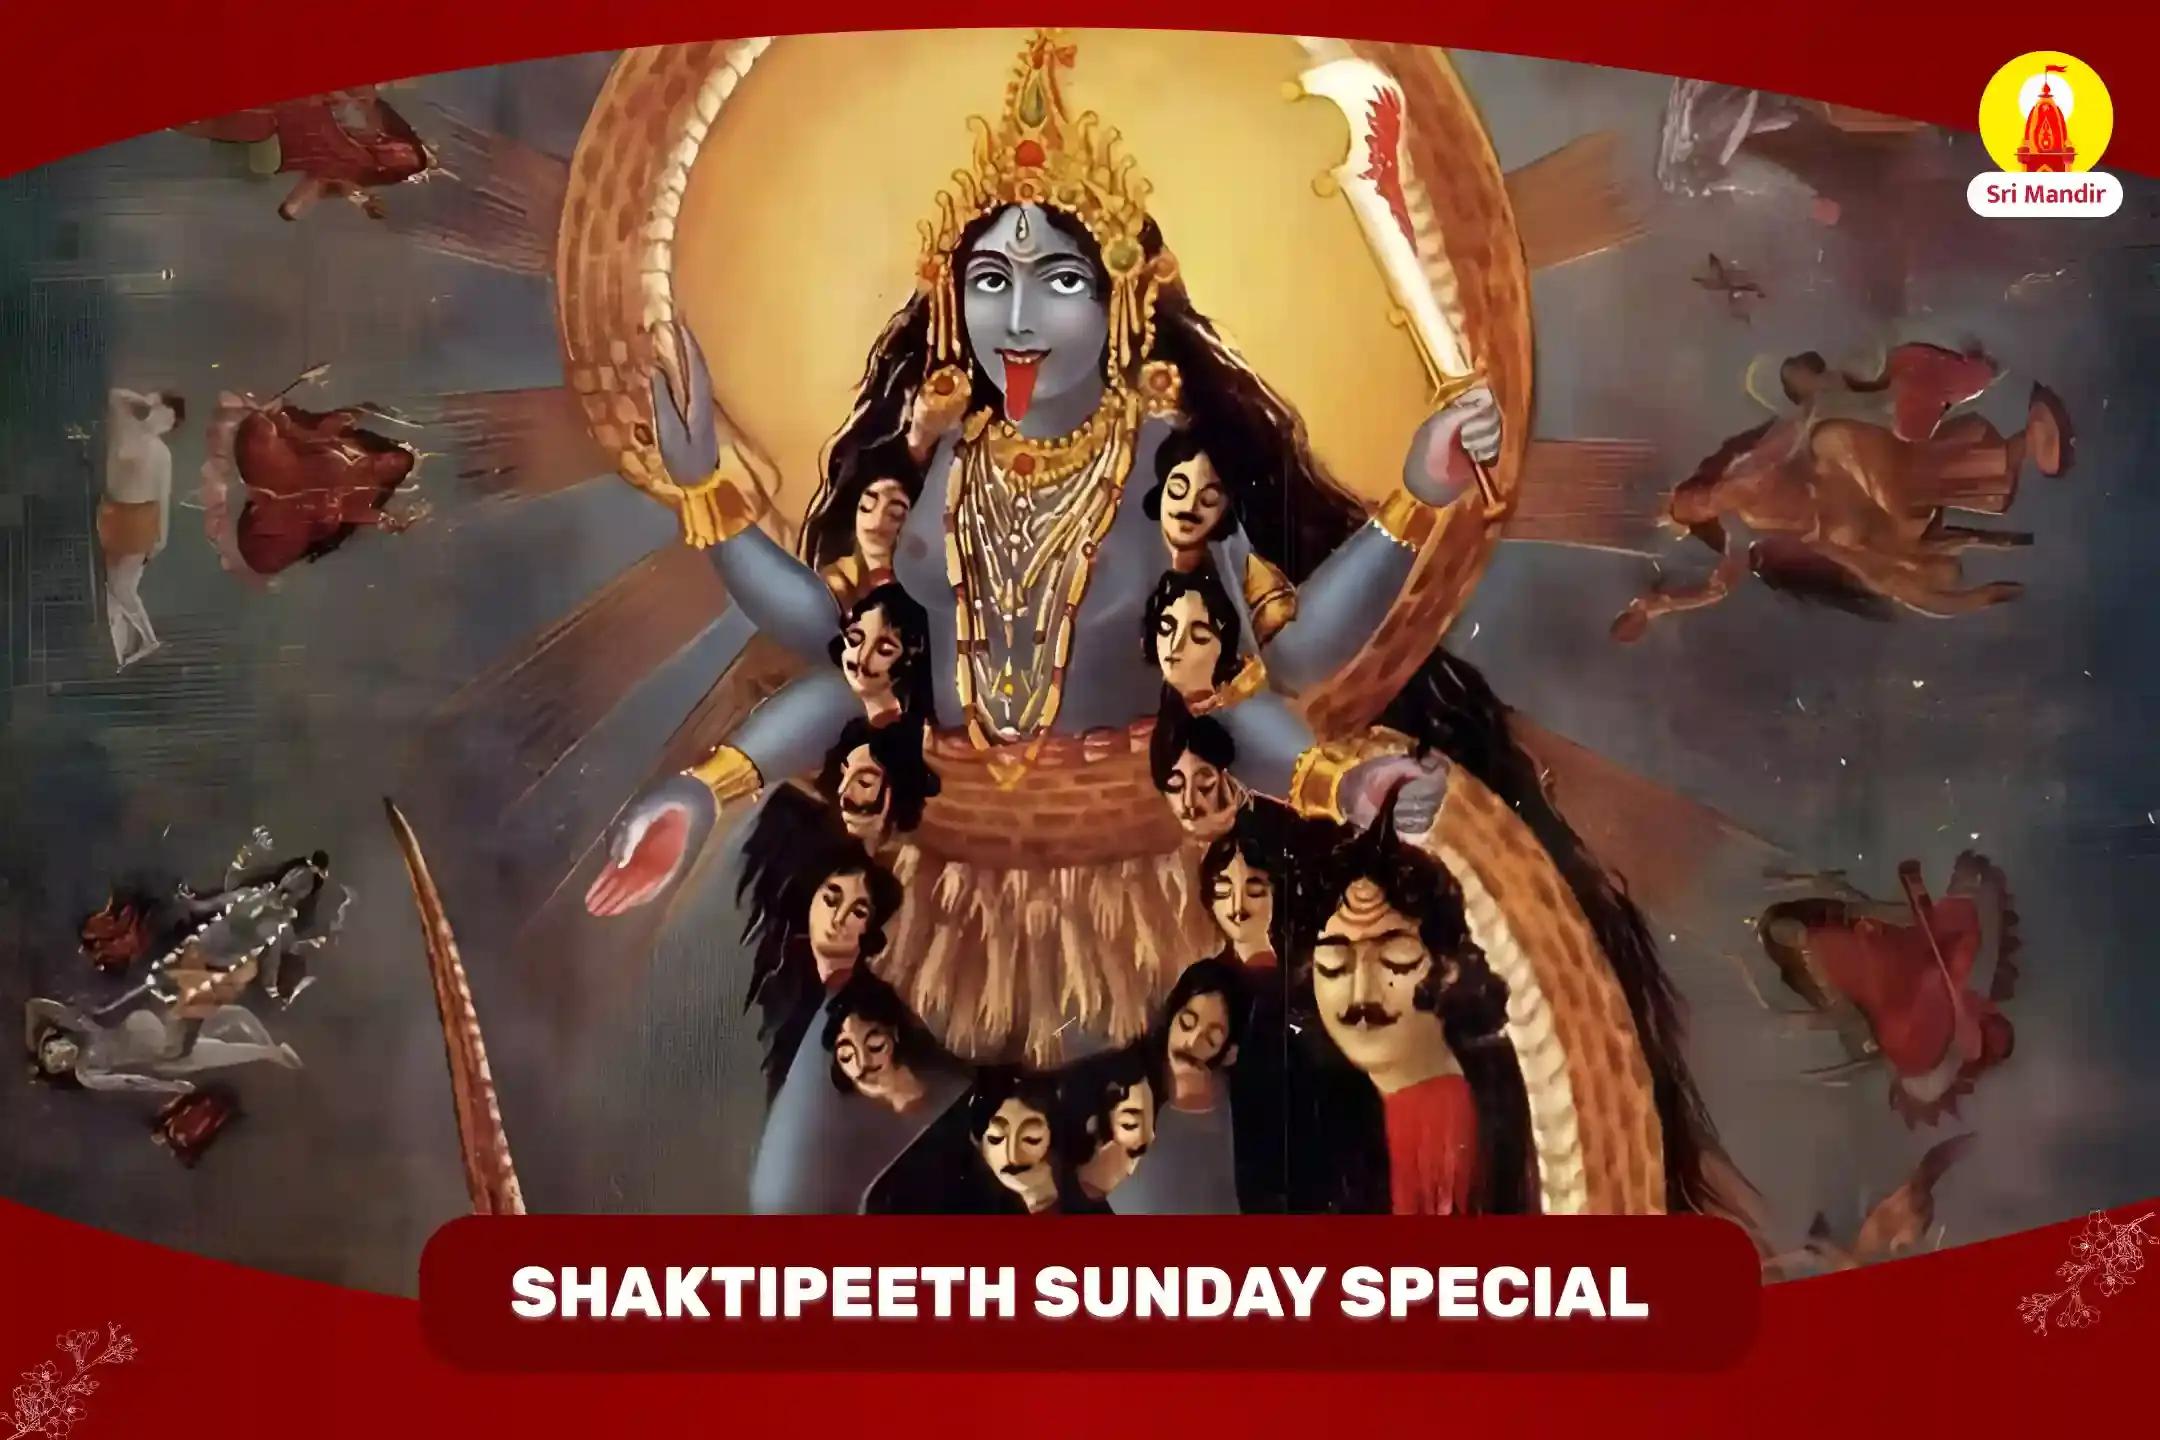 Shaktipeeth Sunday Special Maa Kali Tantra Yukta Mahapuja for Protection from Negative Energy and Overcoming Fear